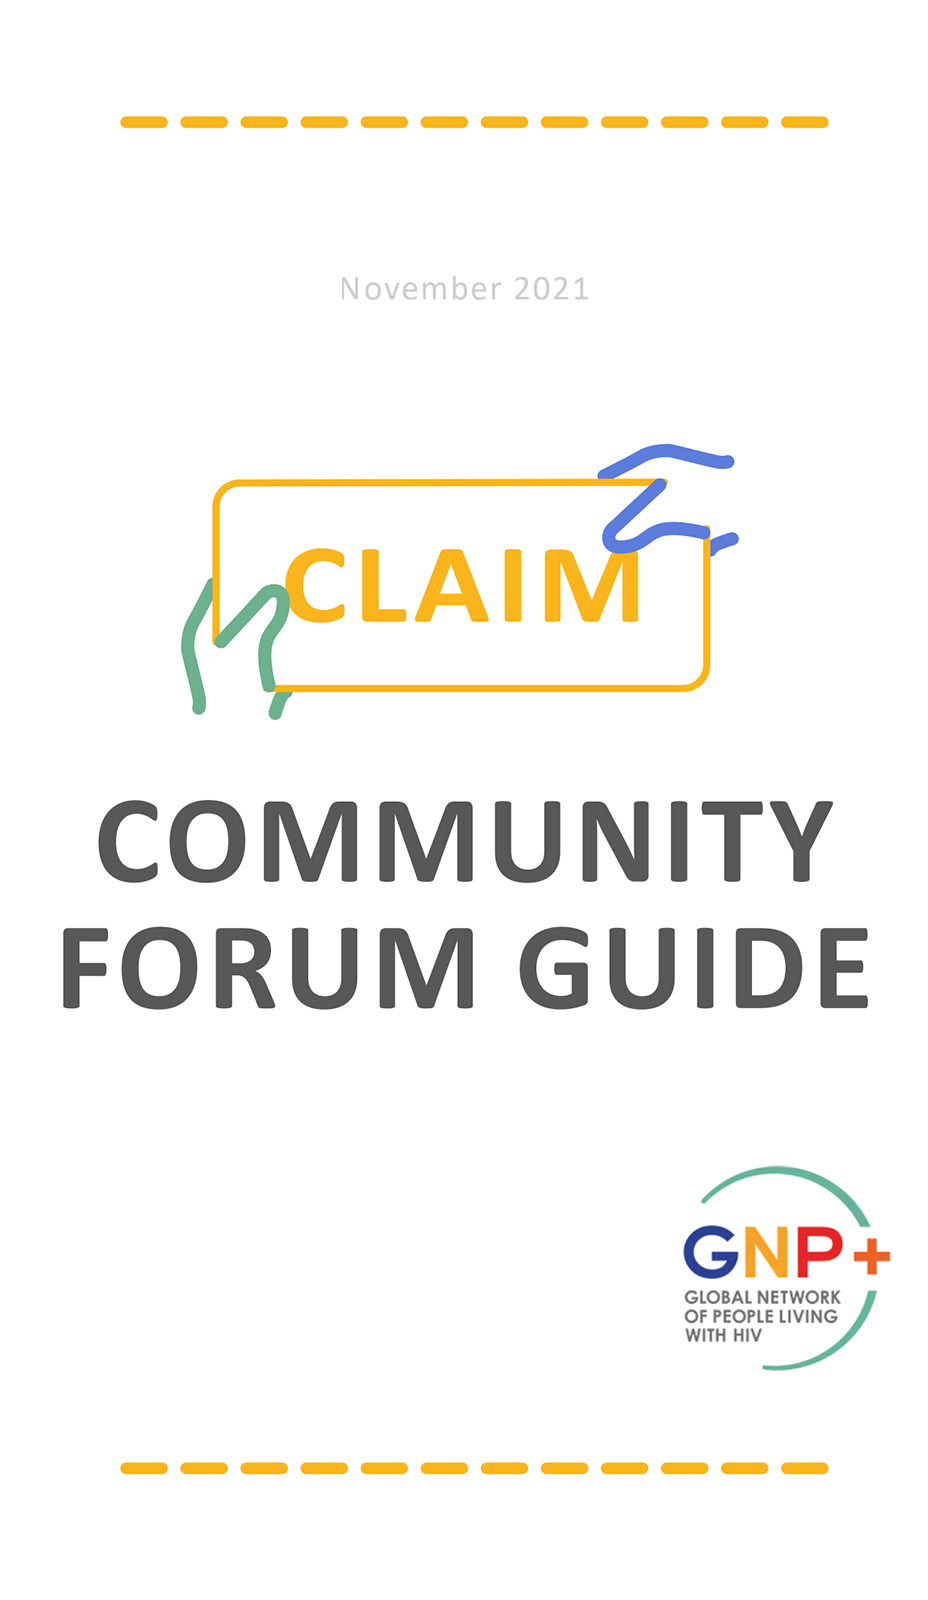 Community Forum Guide